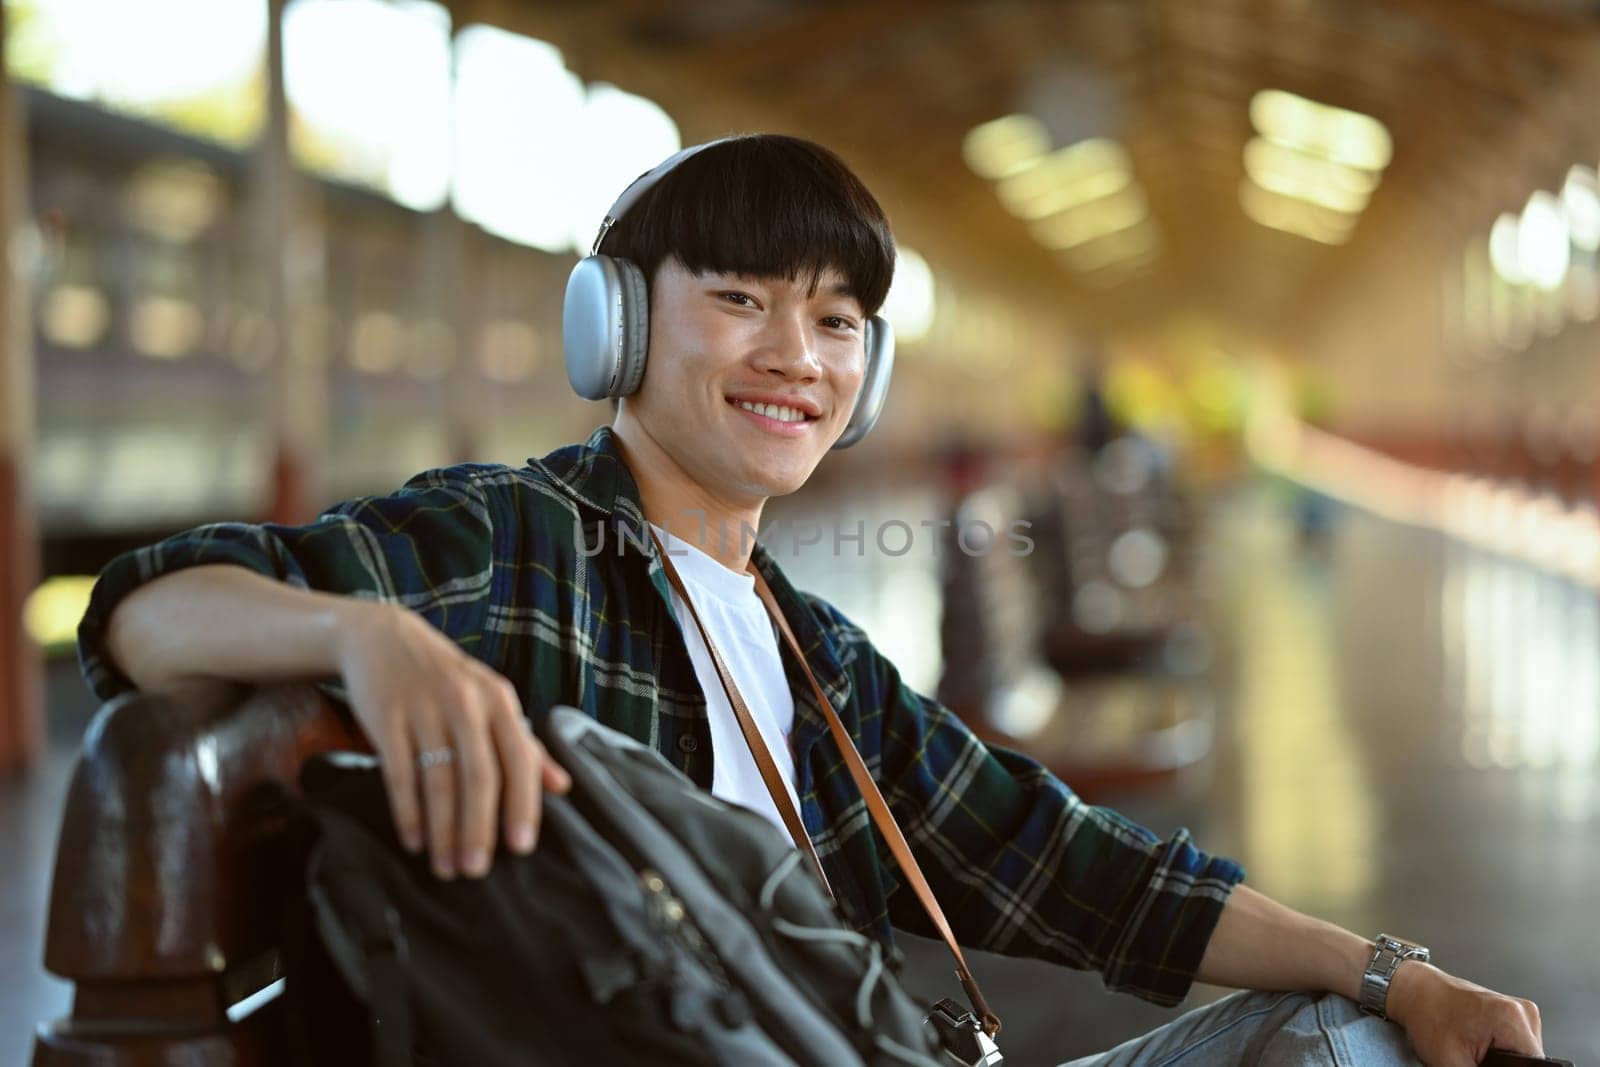 Portrait of smiling Asian man tourist in headphone waiting train at railroad station platform.